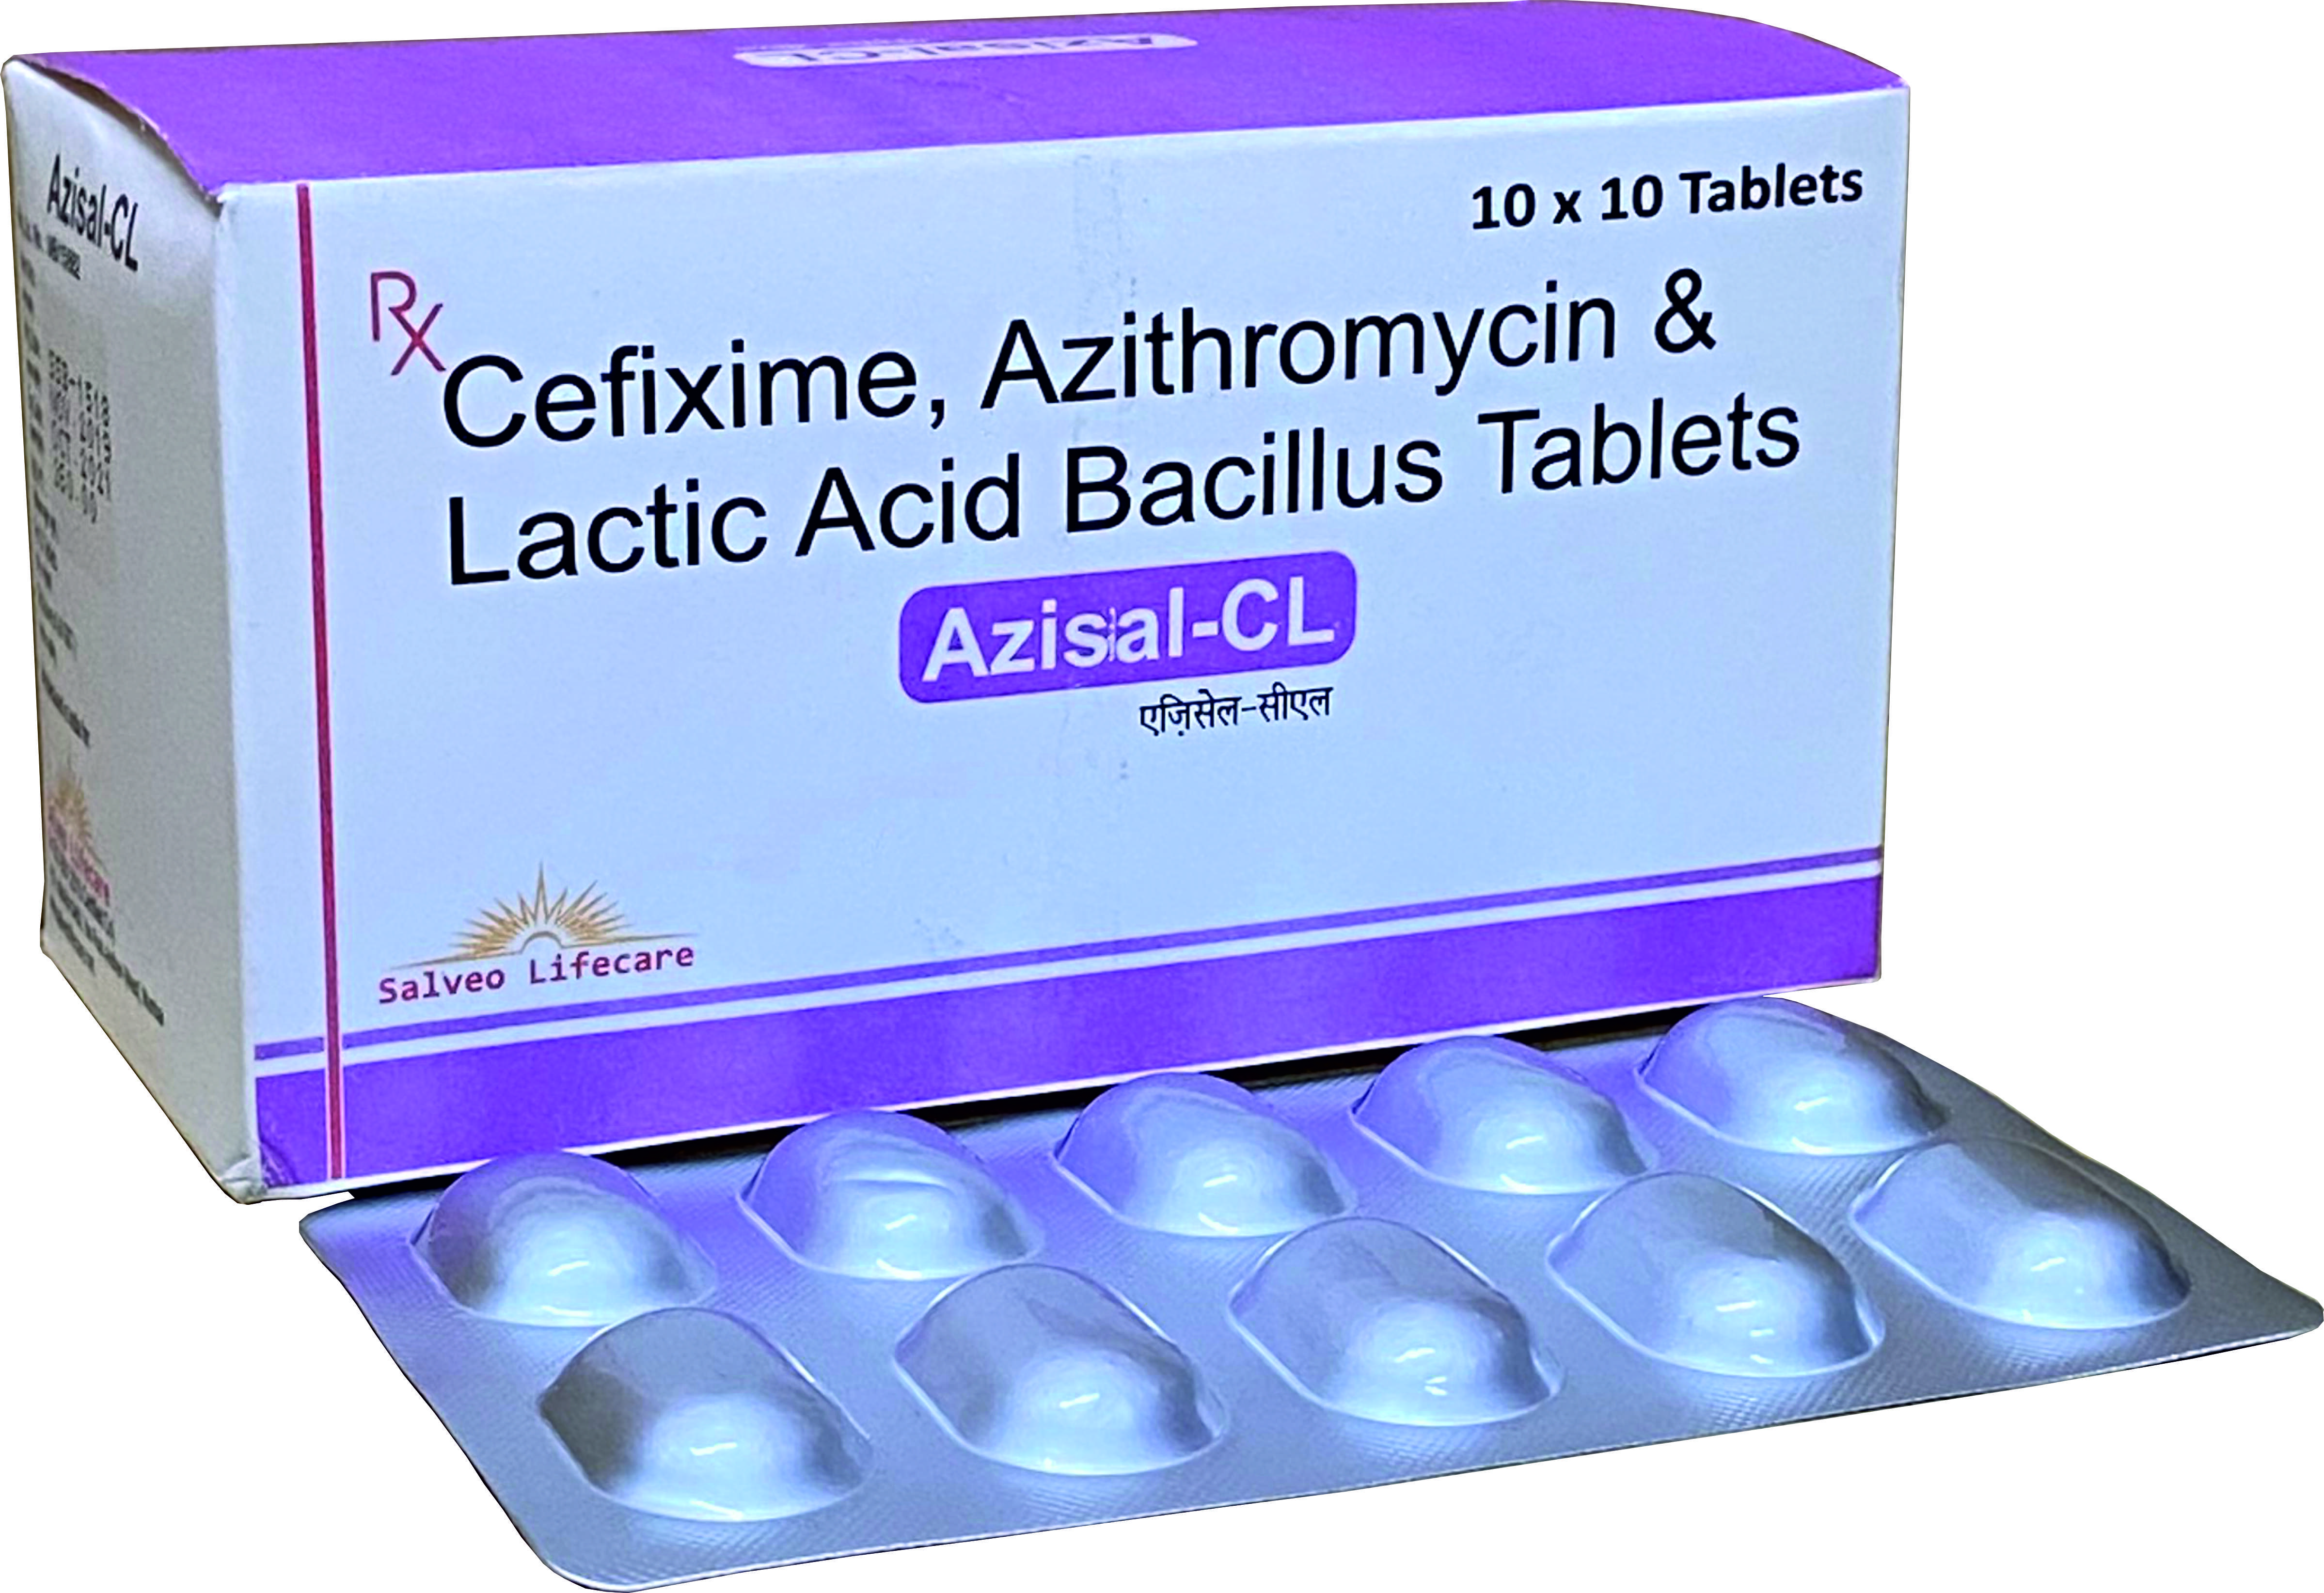 azithromycin 250 mg, cefixime 200 mg, lactic acid
bacillus 60 million spores